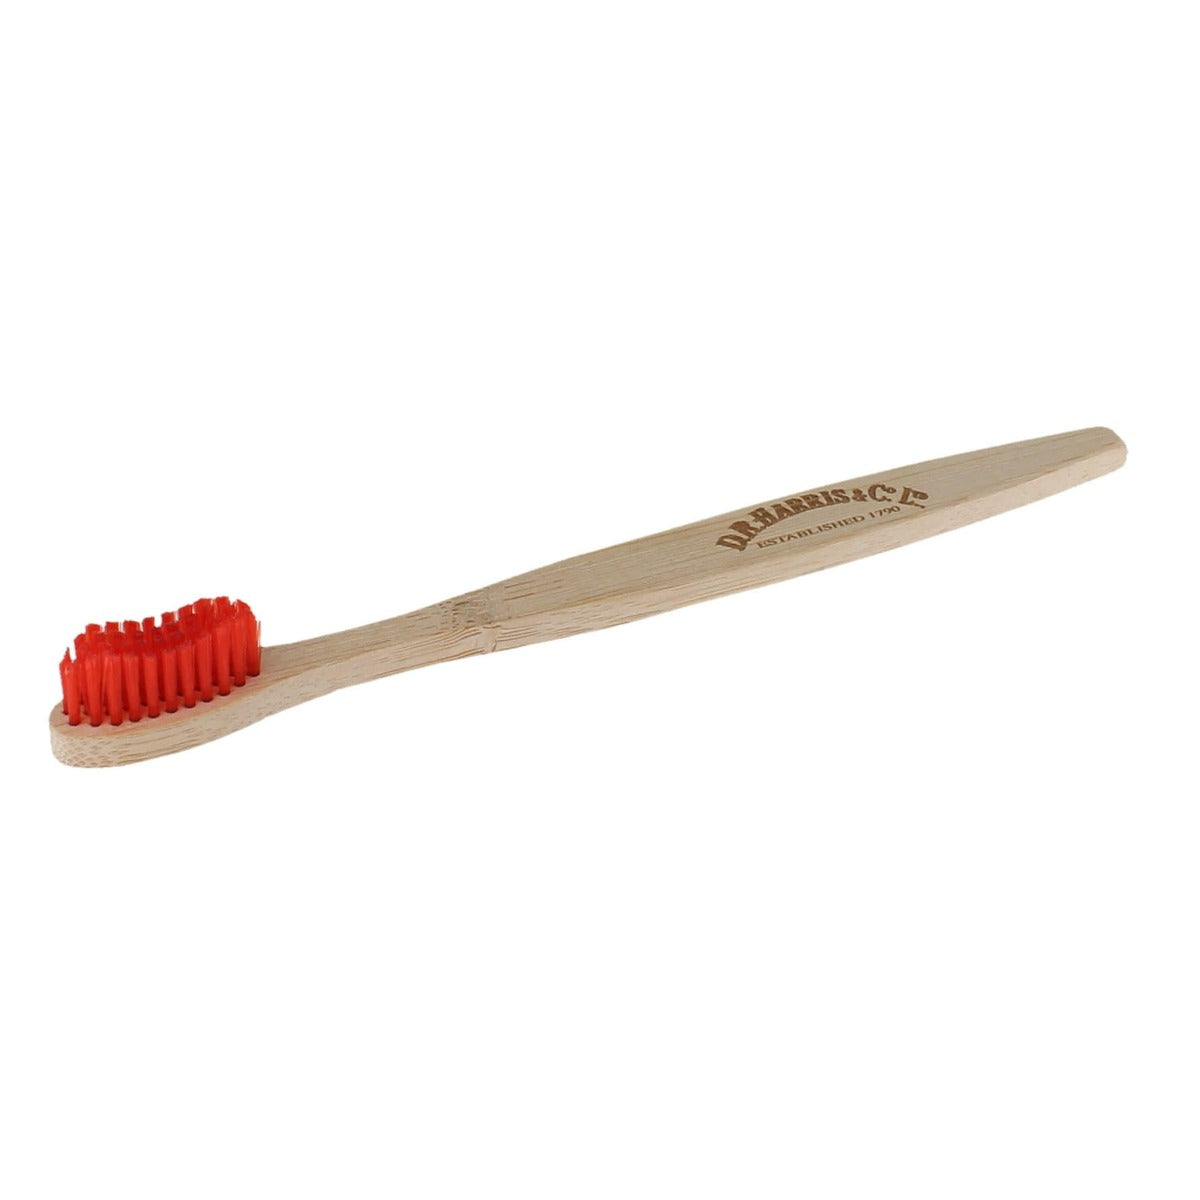 D R Harris Biodegradable Bamboo Toothbrush - Red Bristles